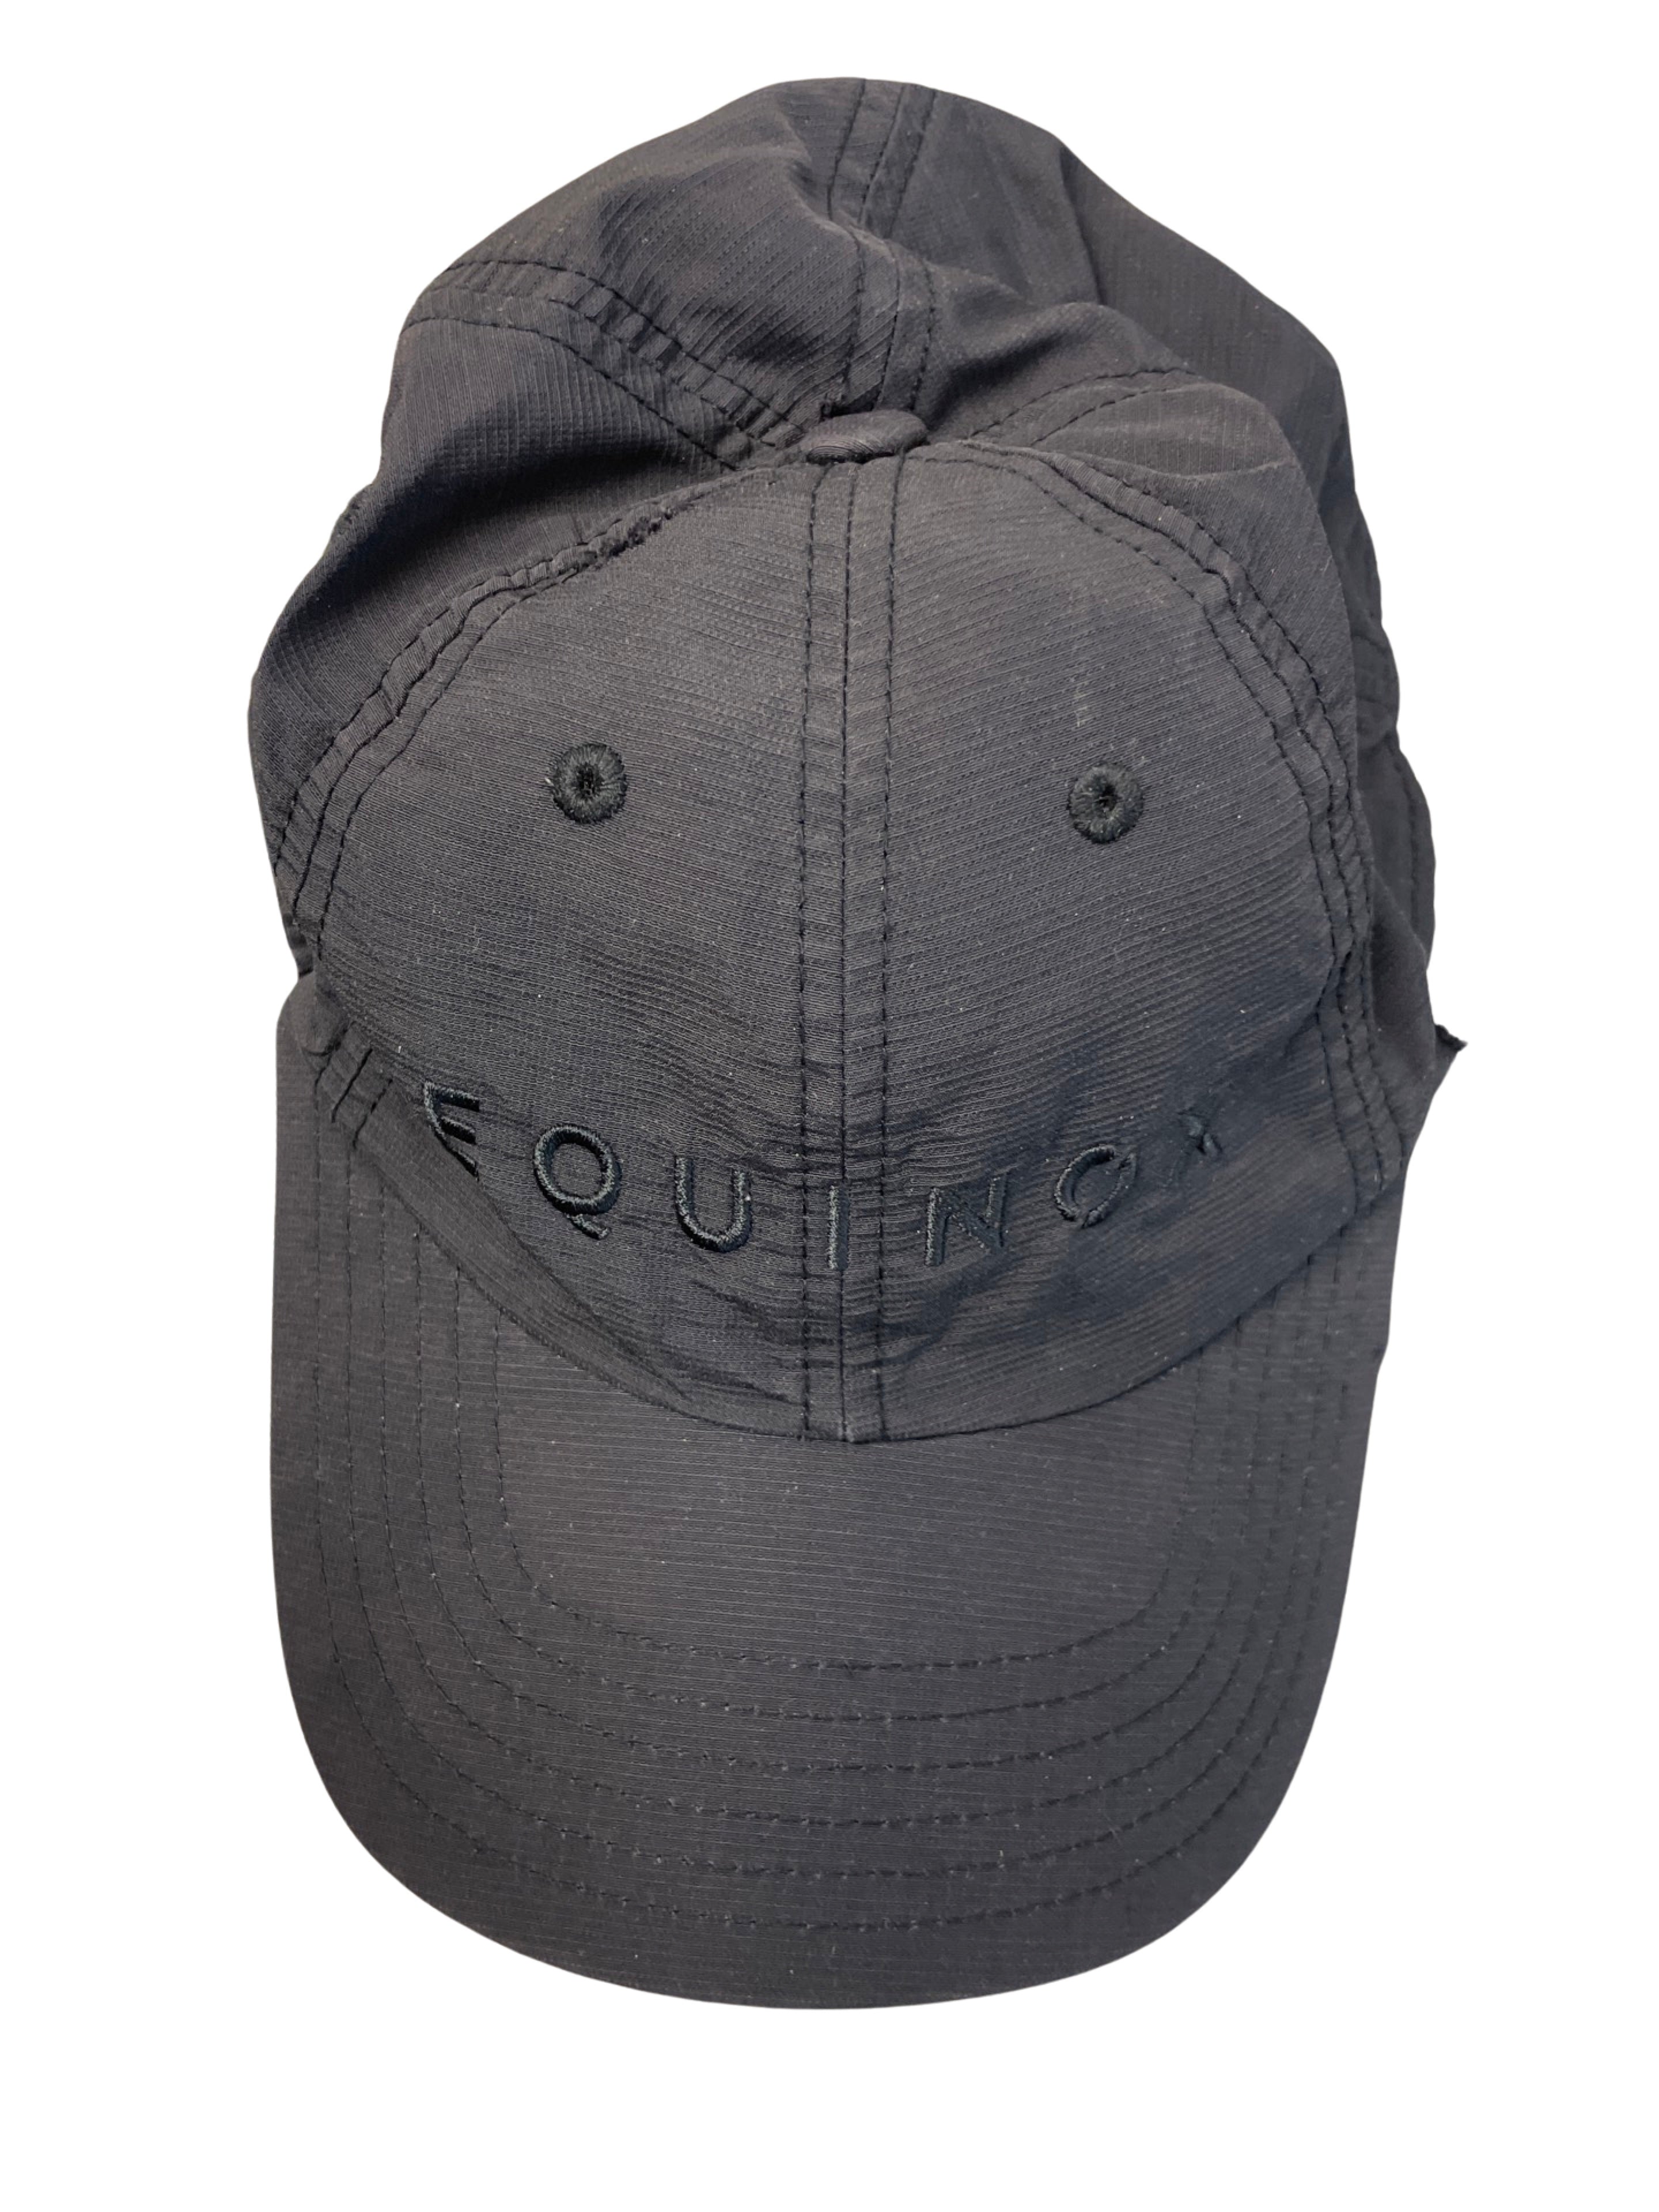 Rubynee Vintage y2k black baseball cap with equinox crest design